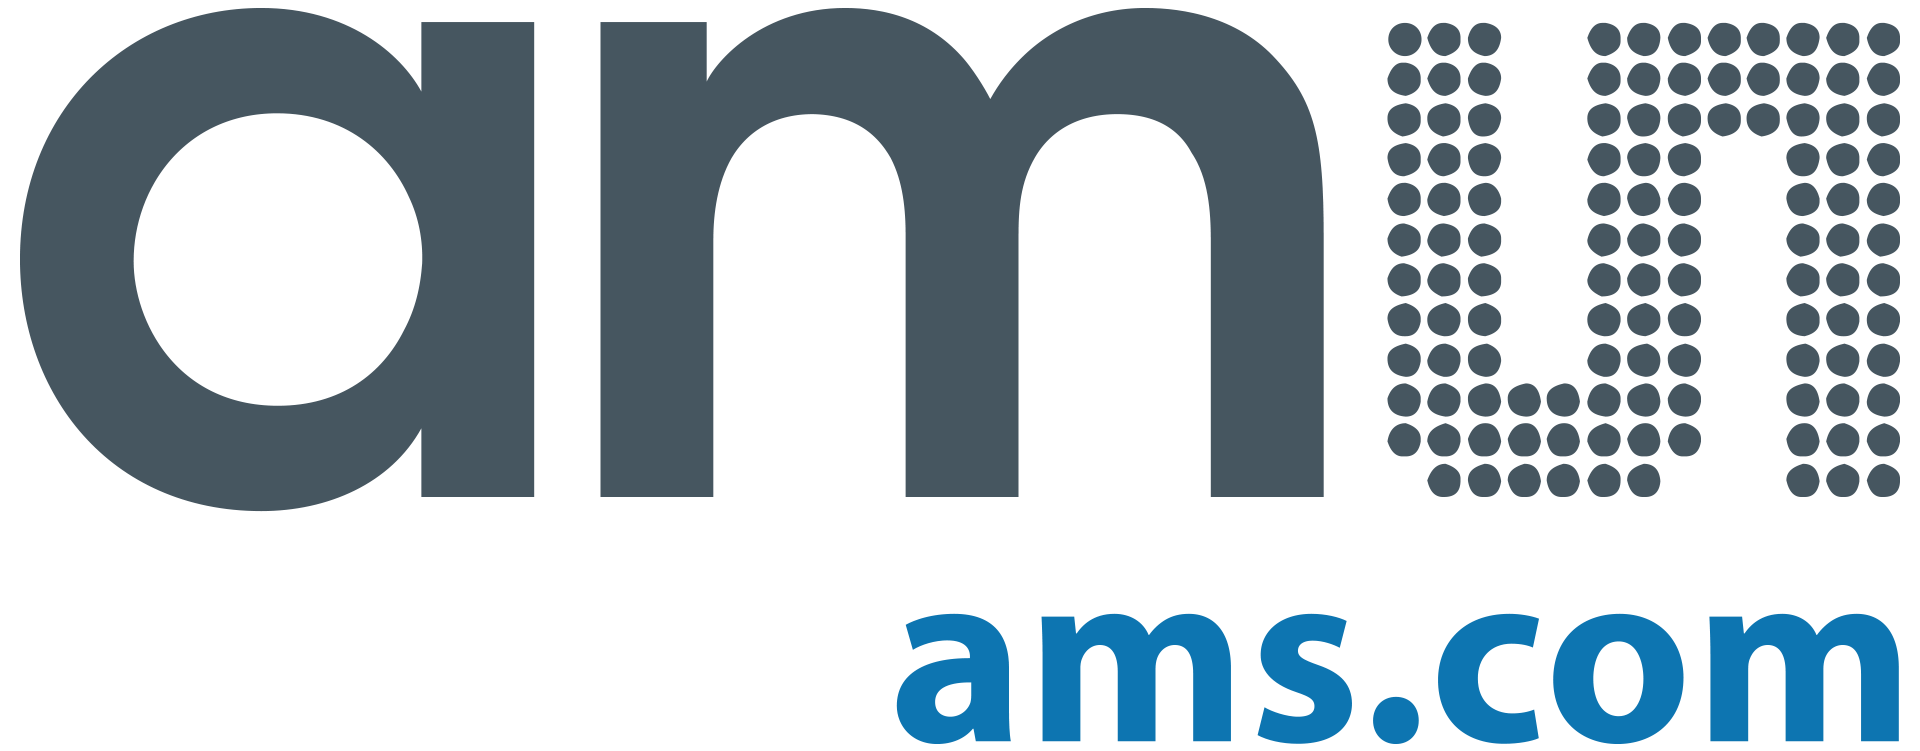 Ams - מעצבים את העולם עם פתרונות חיישנים